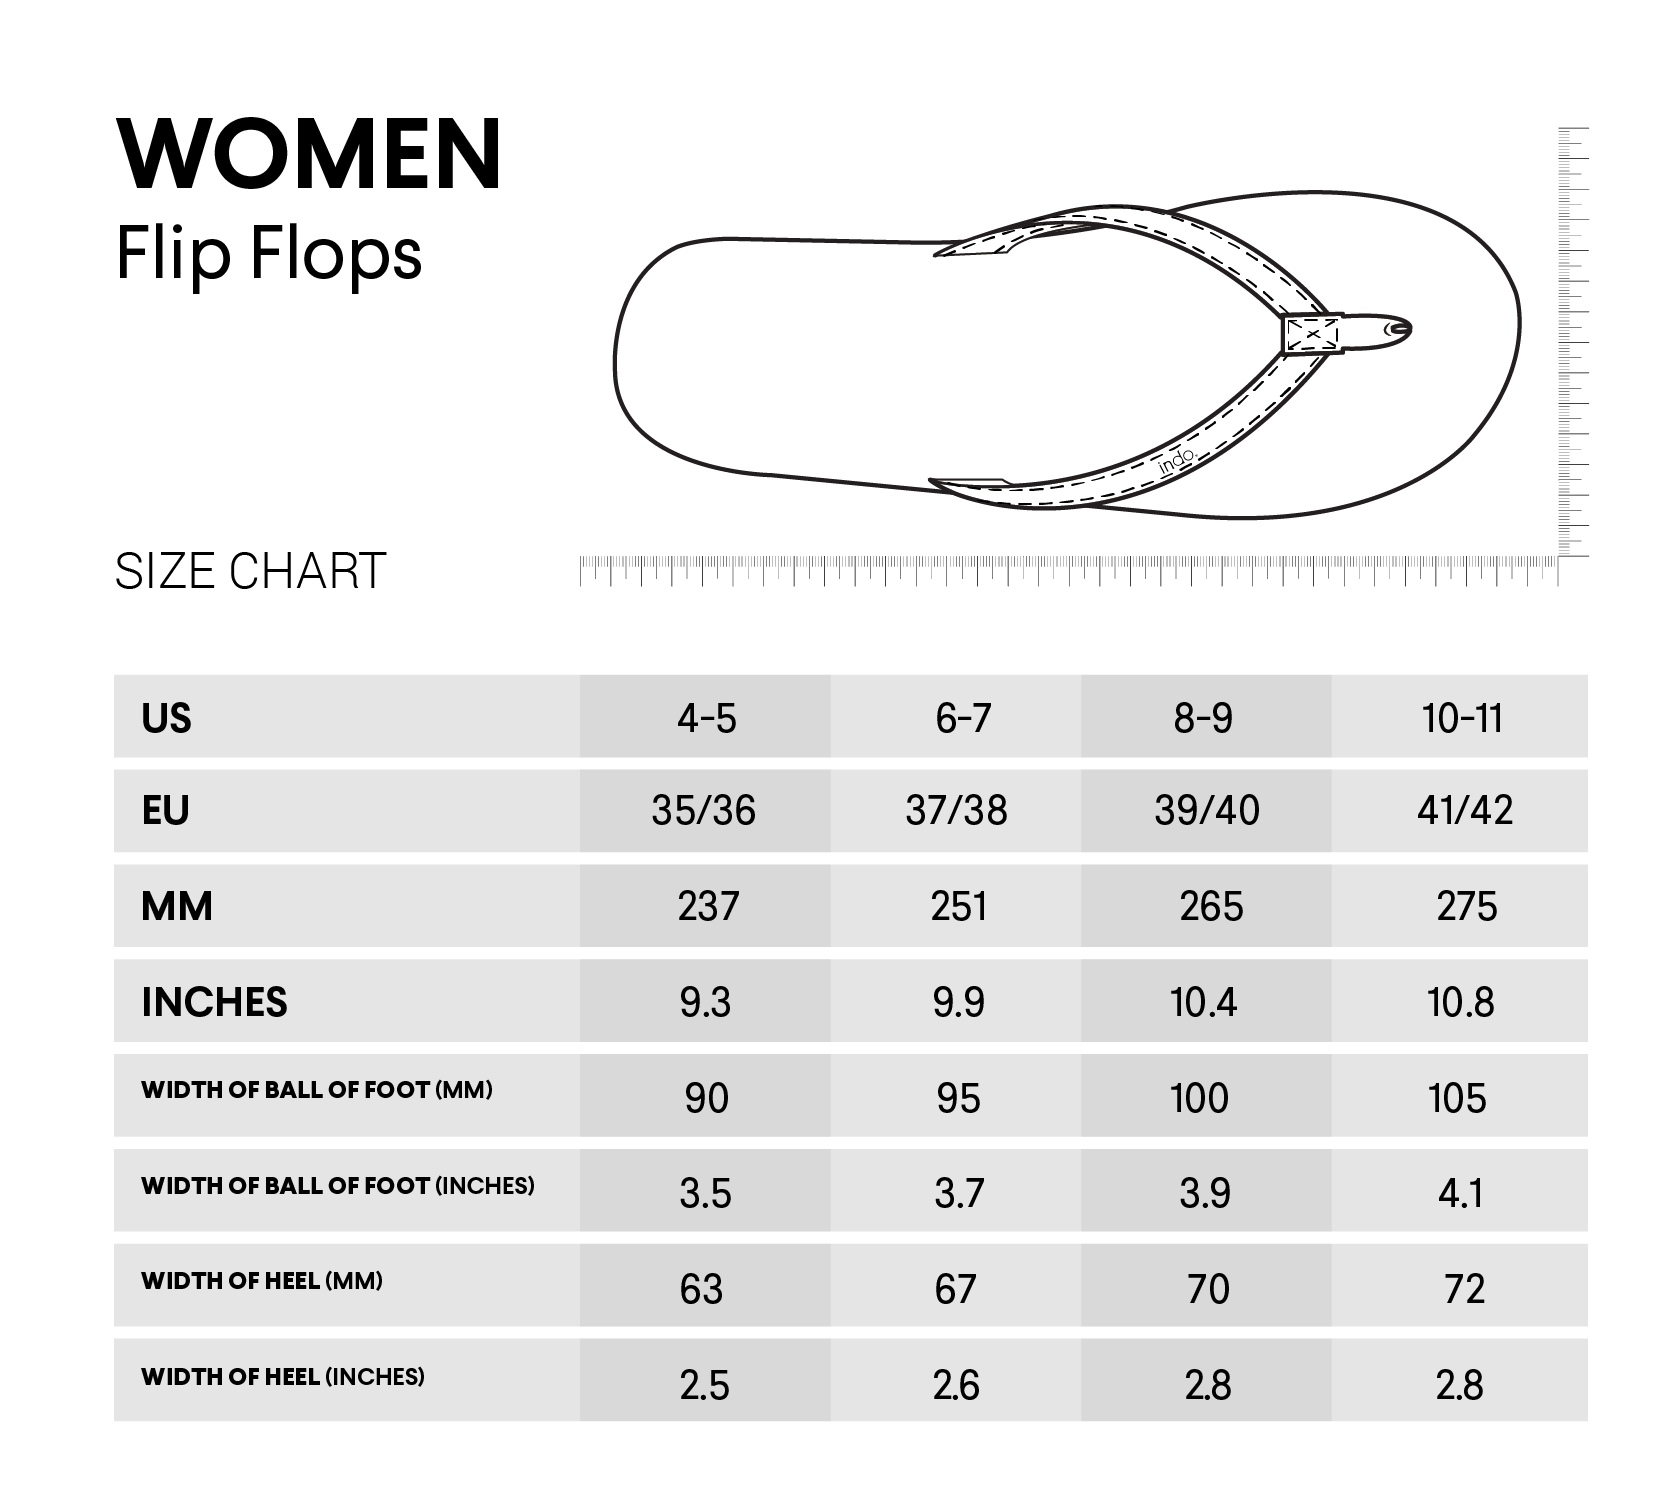 Women’s Flip Flops - Color Block Lilac / Sea Salt